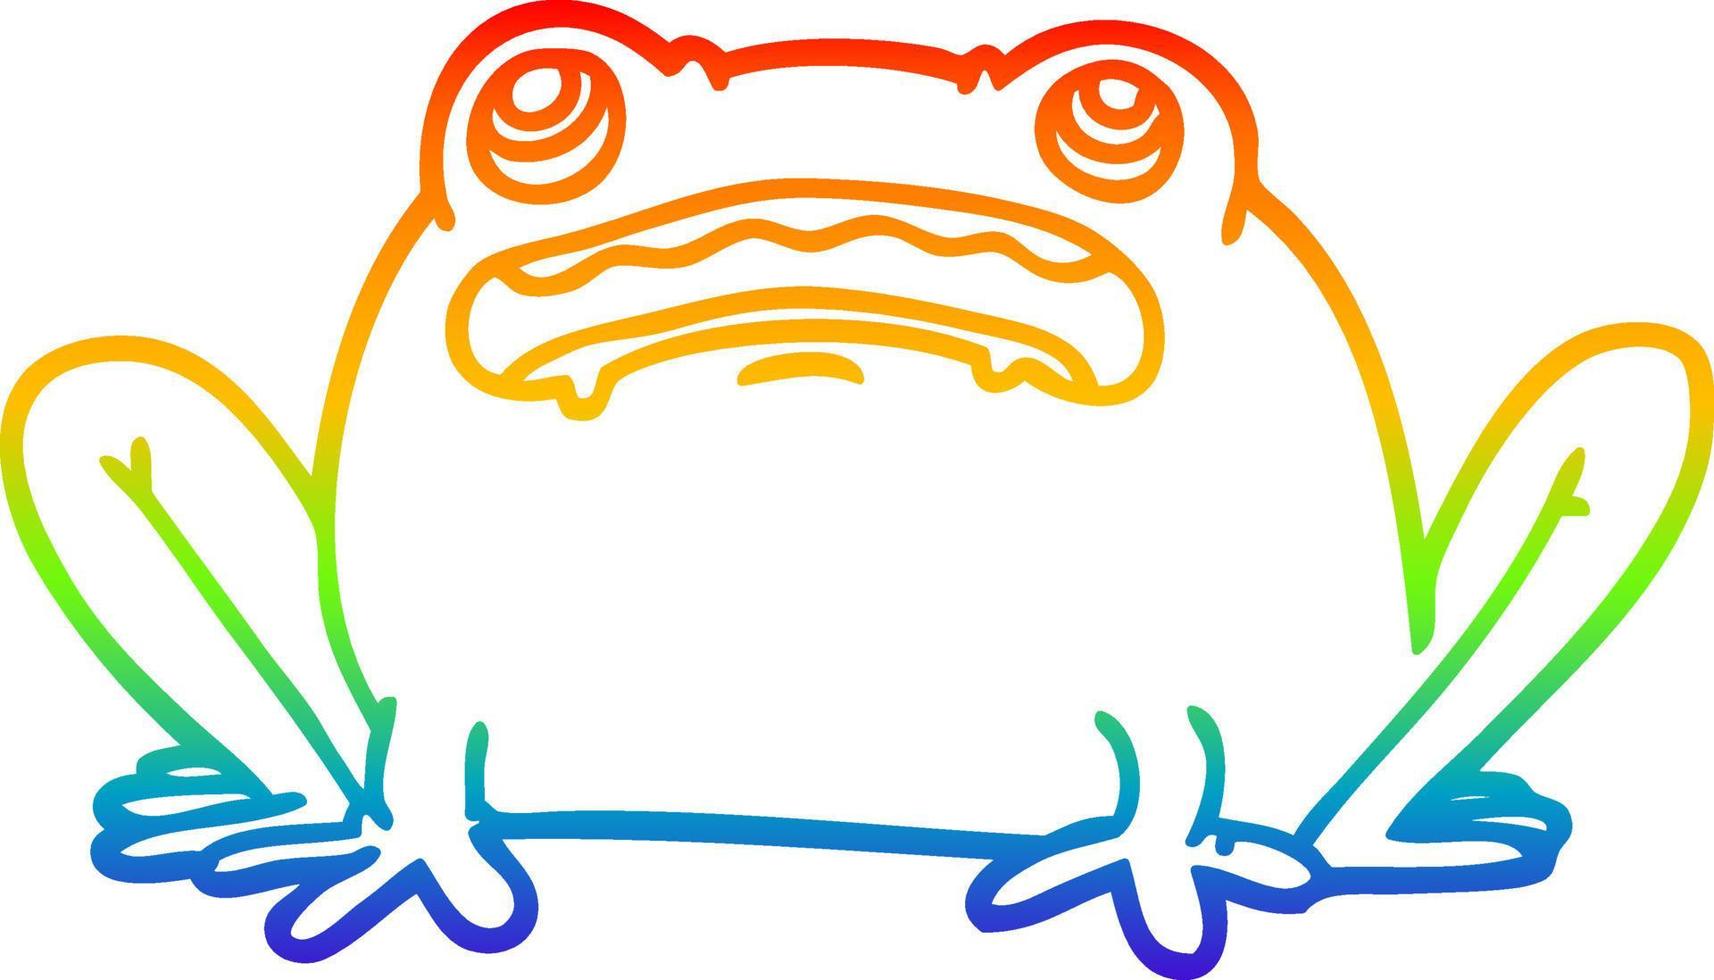 arco iris gradiente línea dibujo dibujos animados rana vector